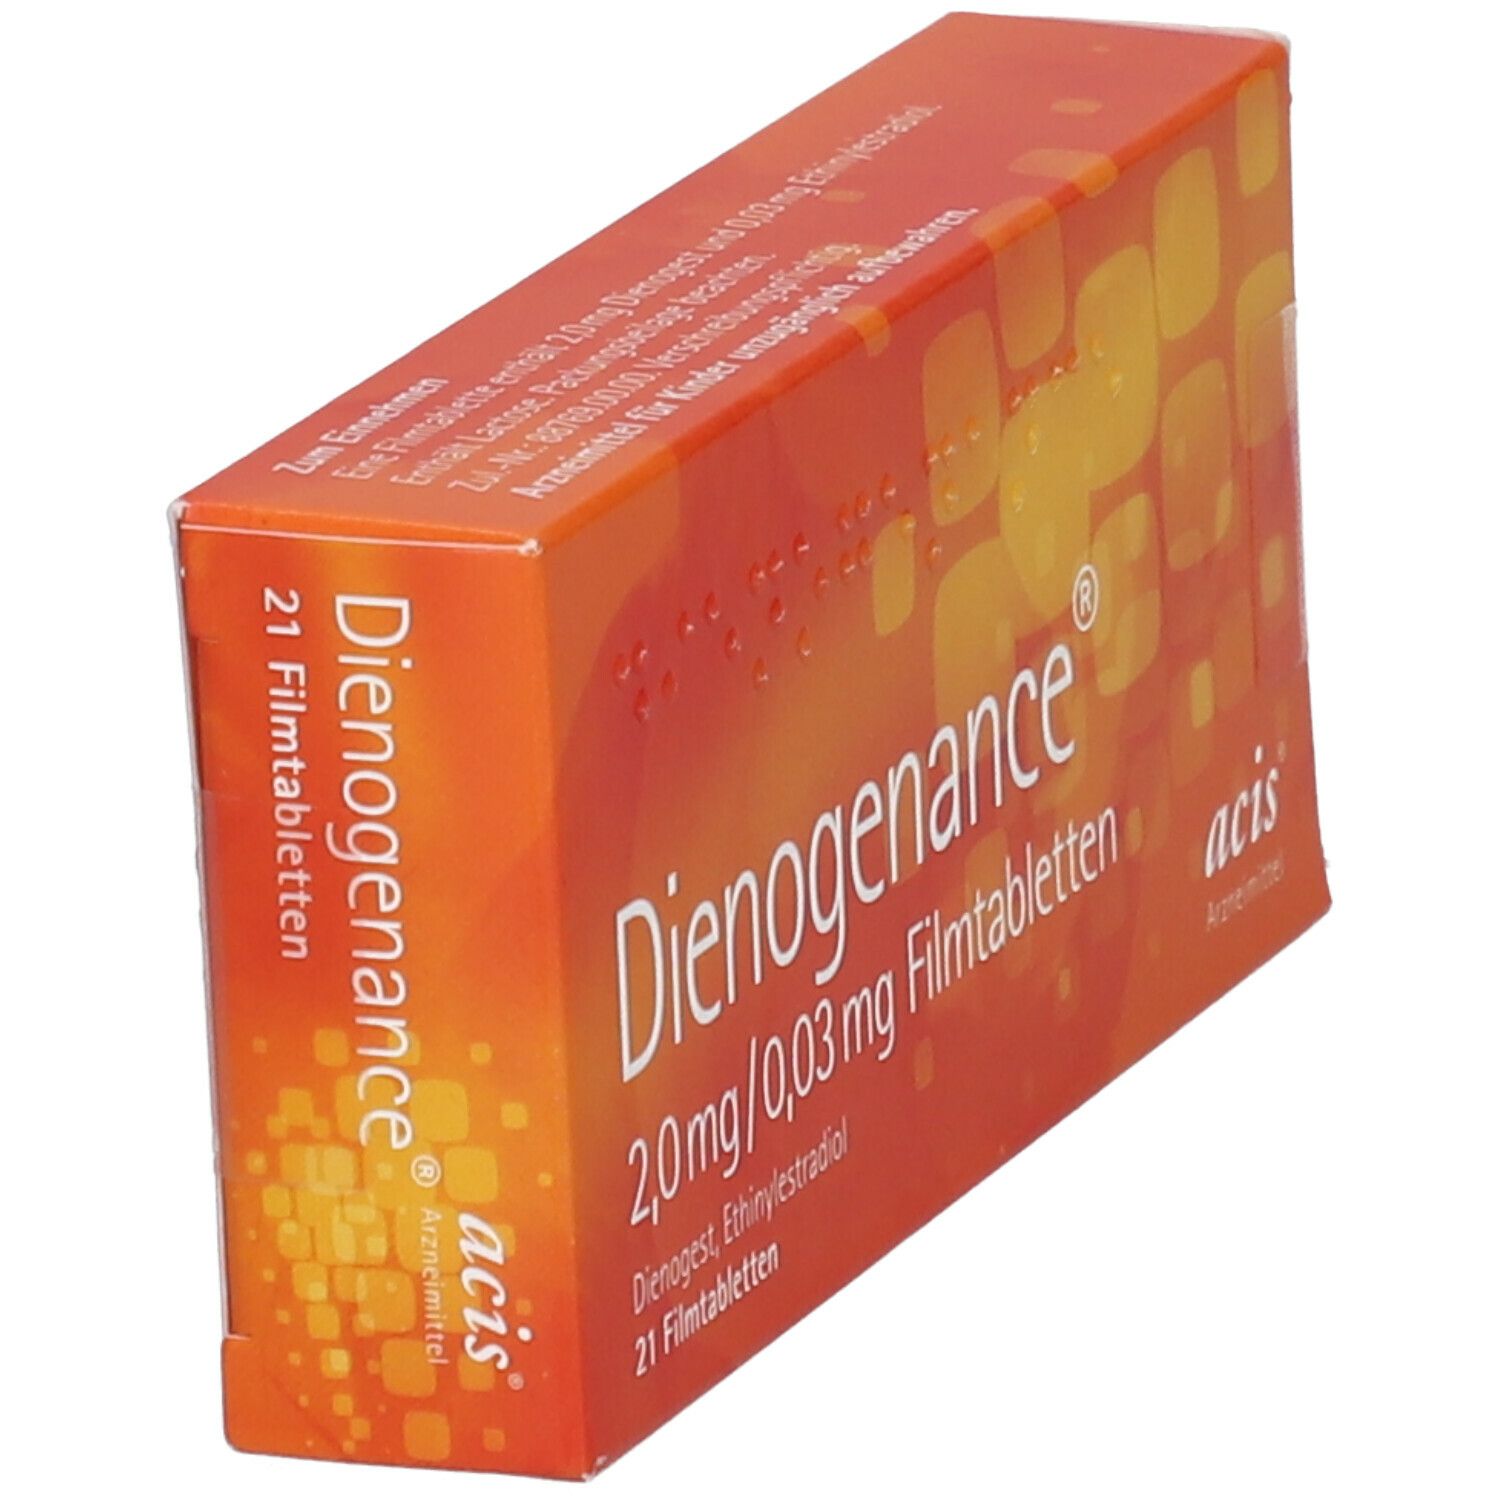 Dienogenance 2,0 mg/0,03 mg